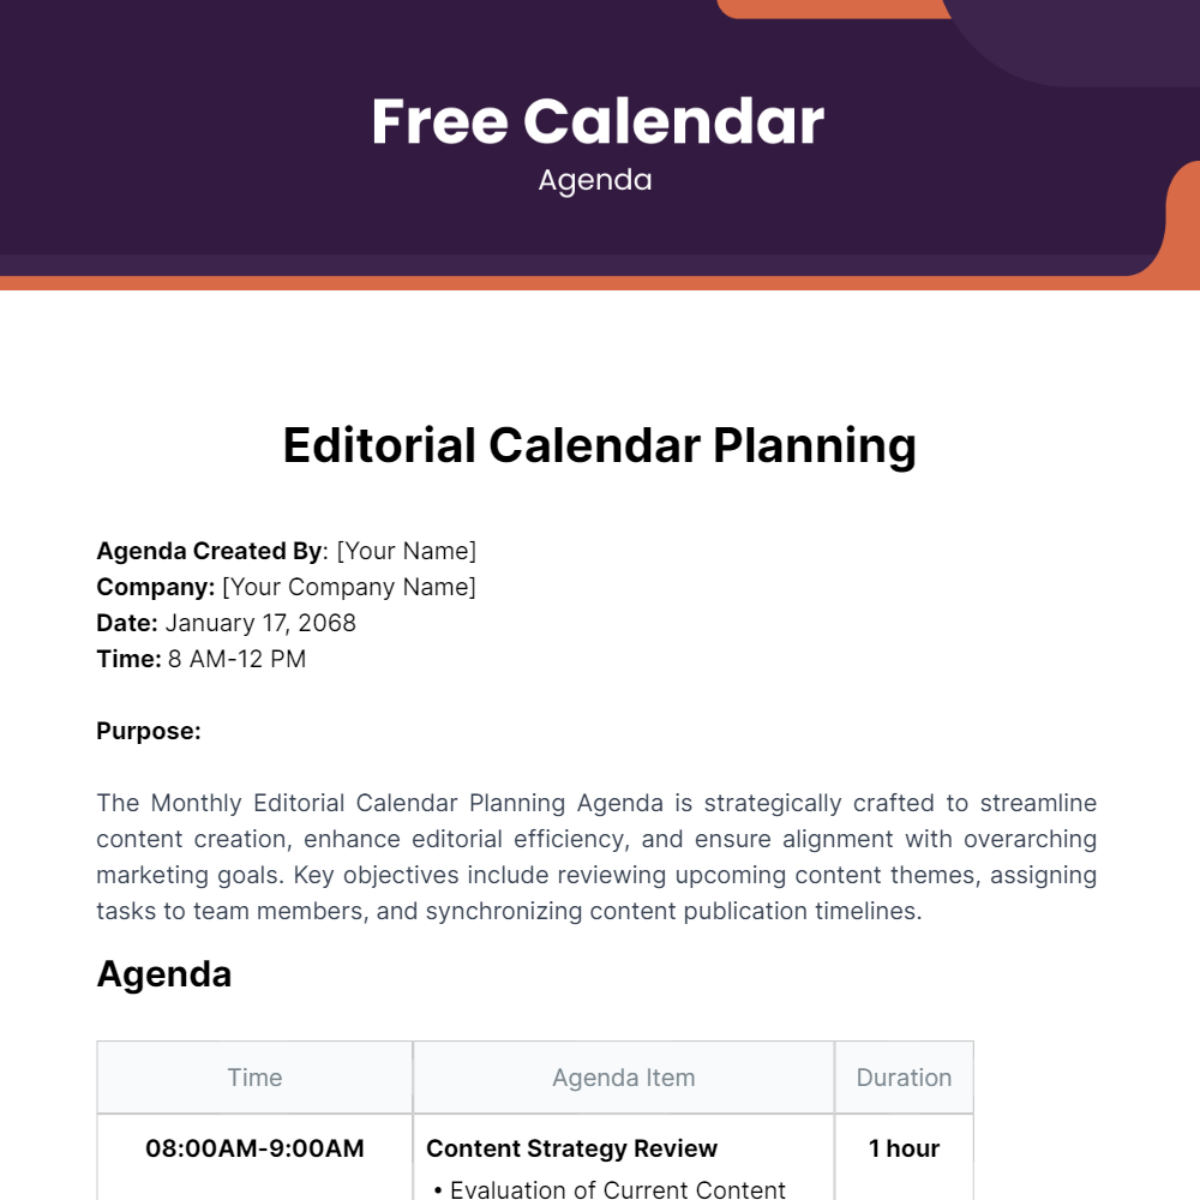 Calendar Agenda Template